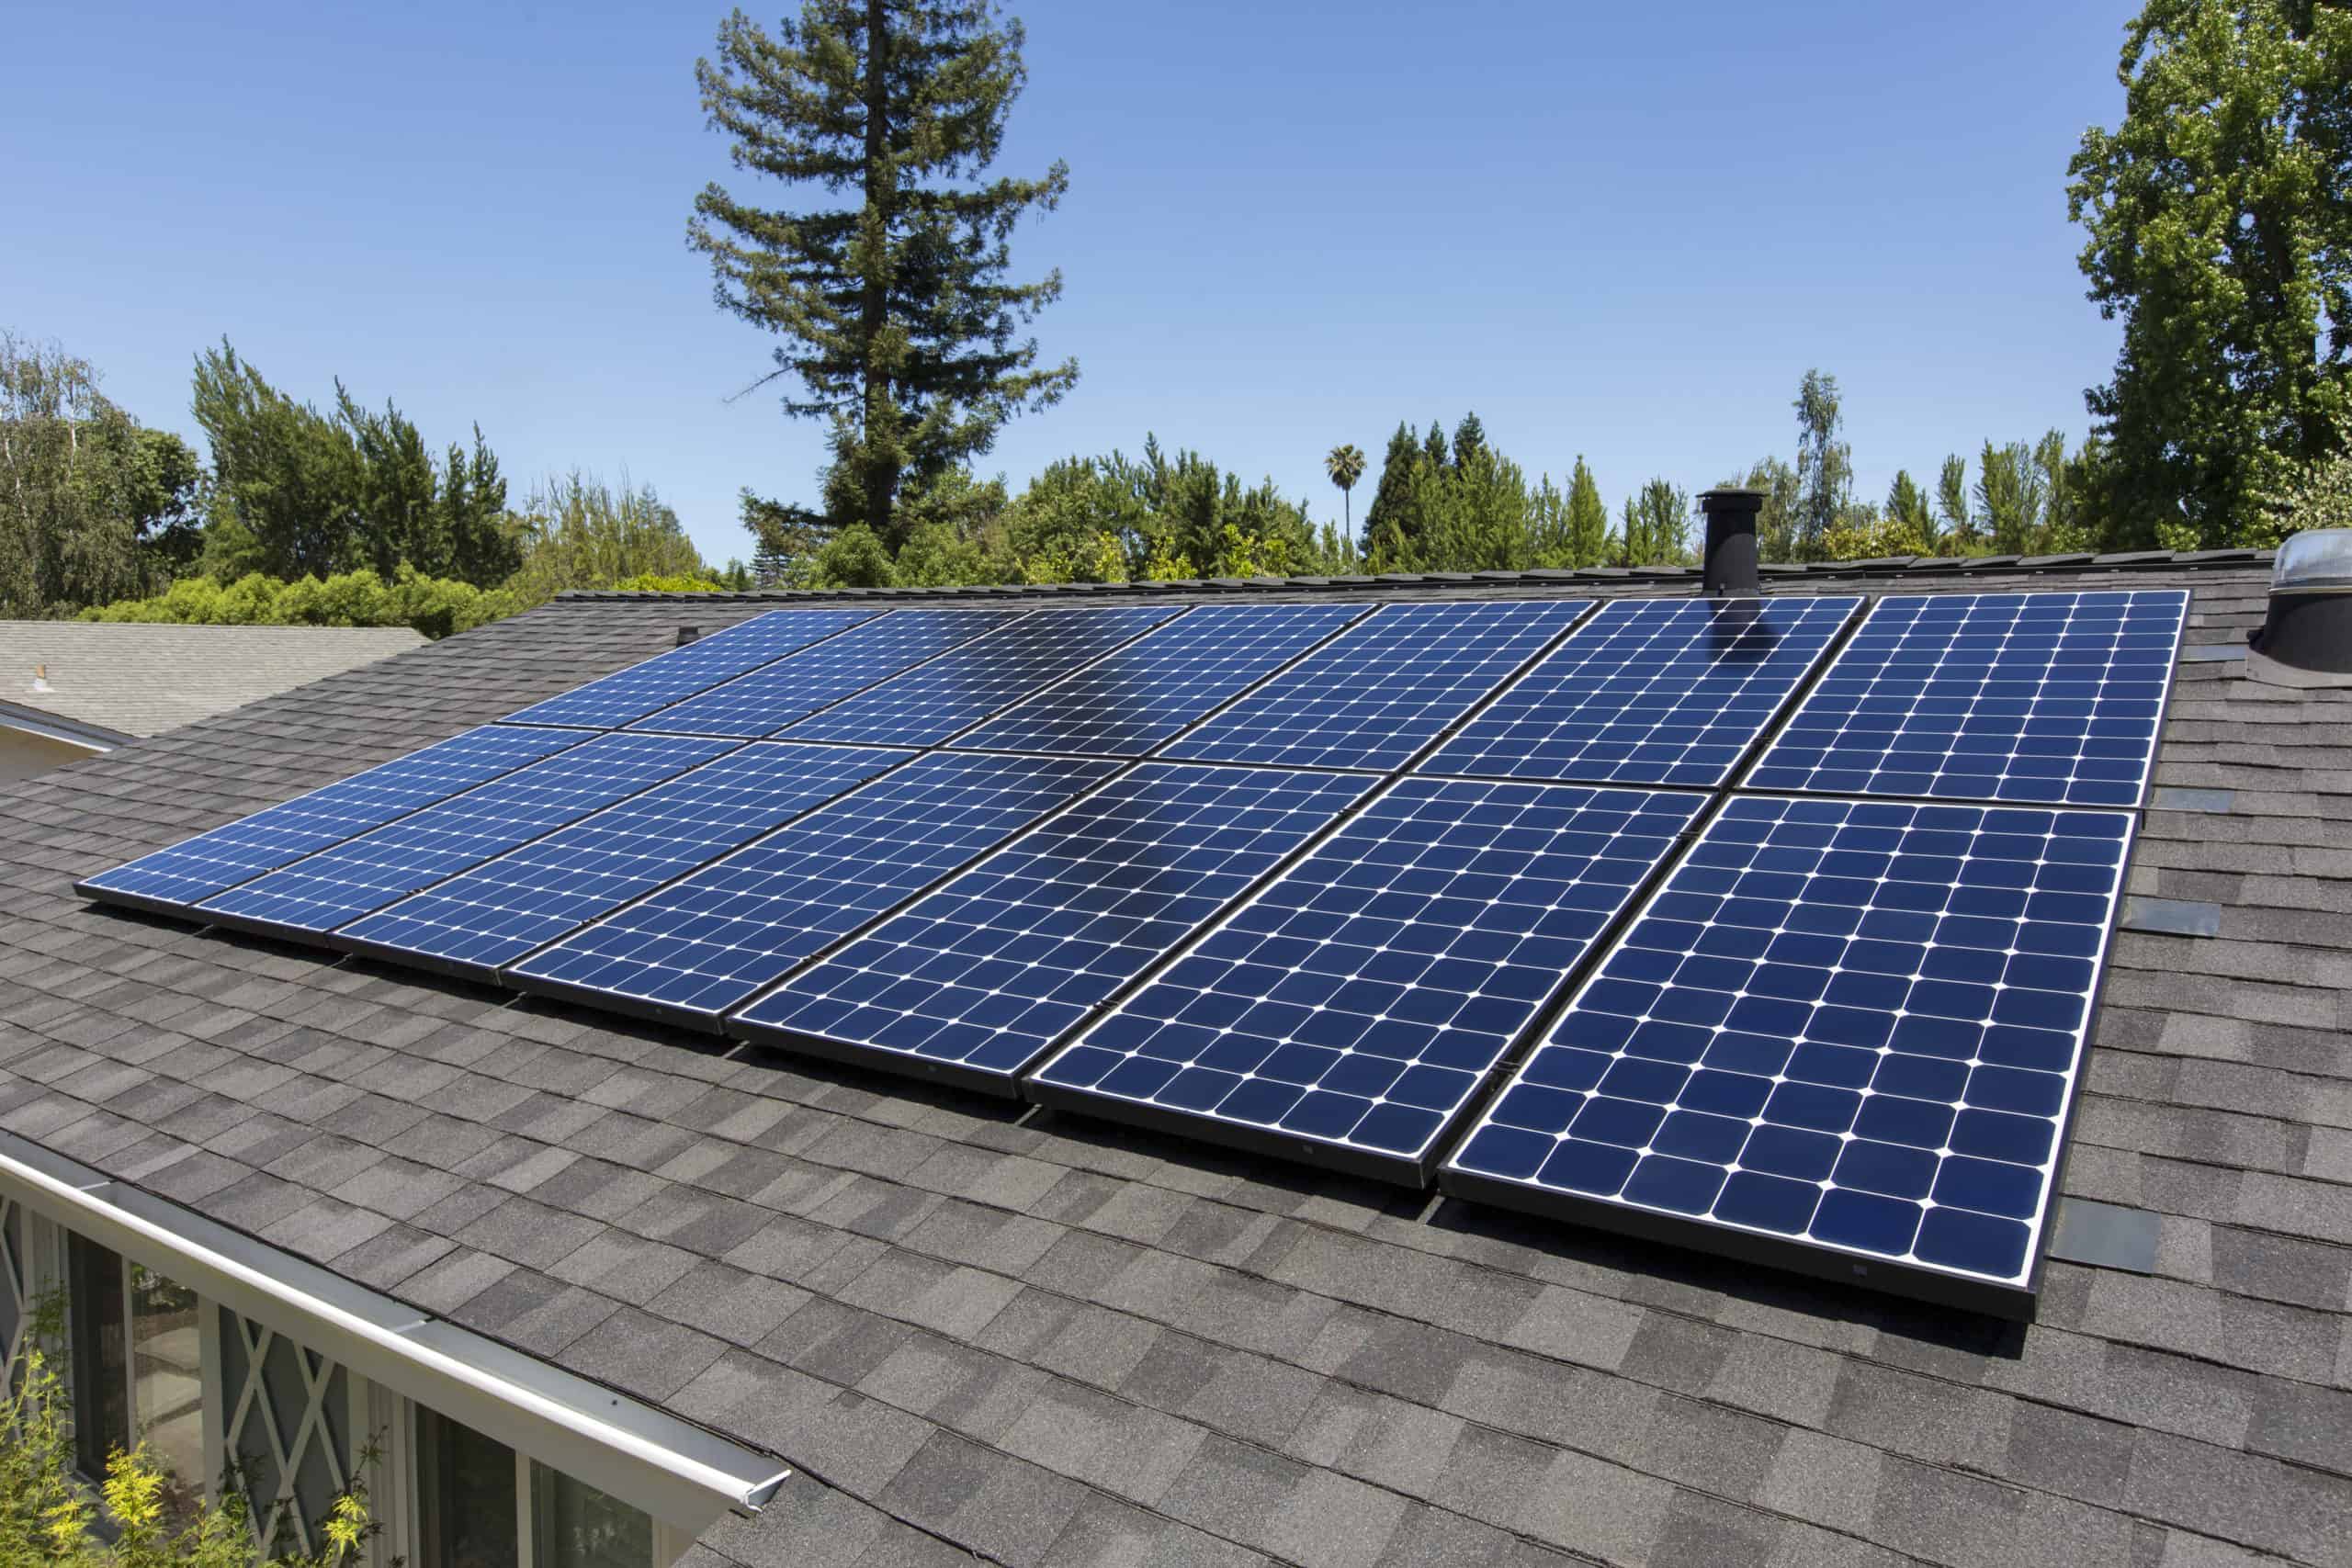 solar-panels-are-cheap-despite-trump-tariffs-the-motley-fool